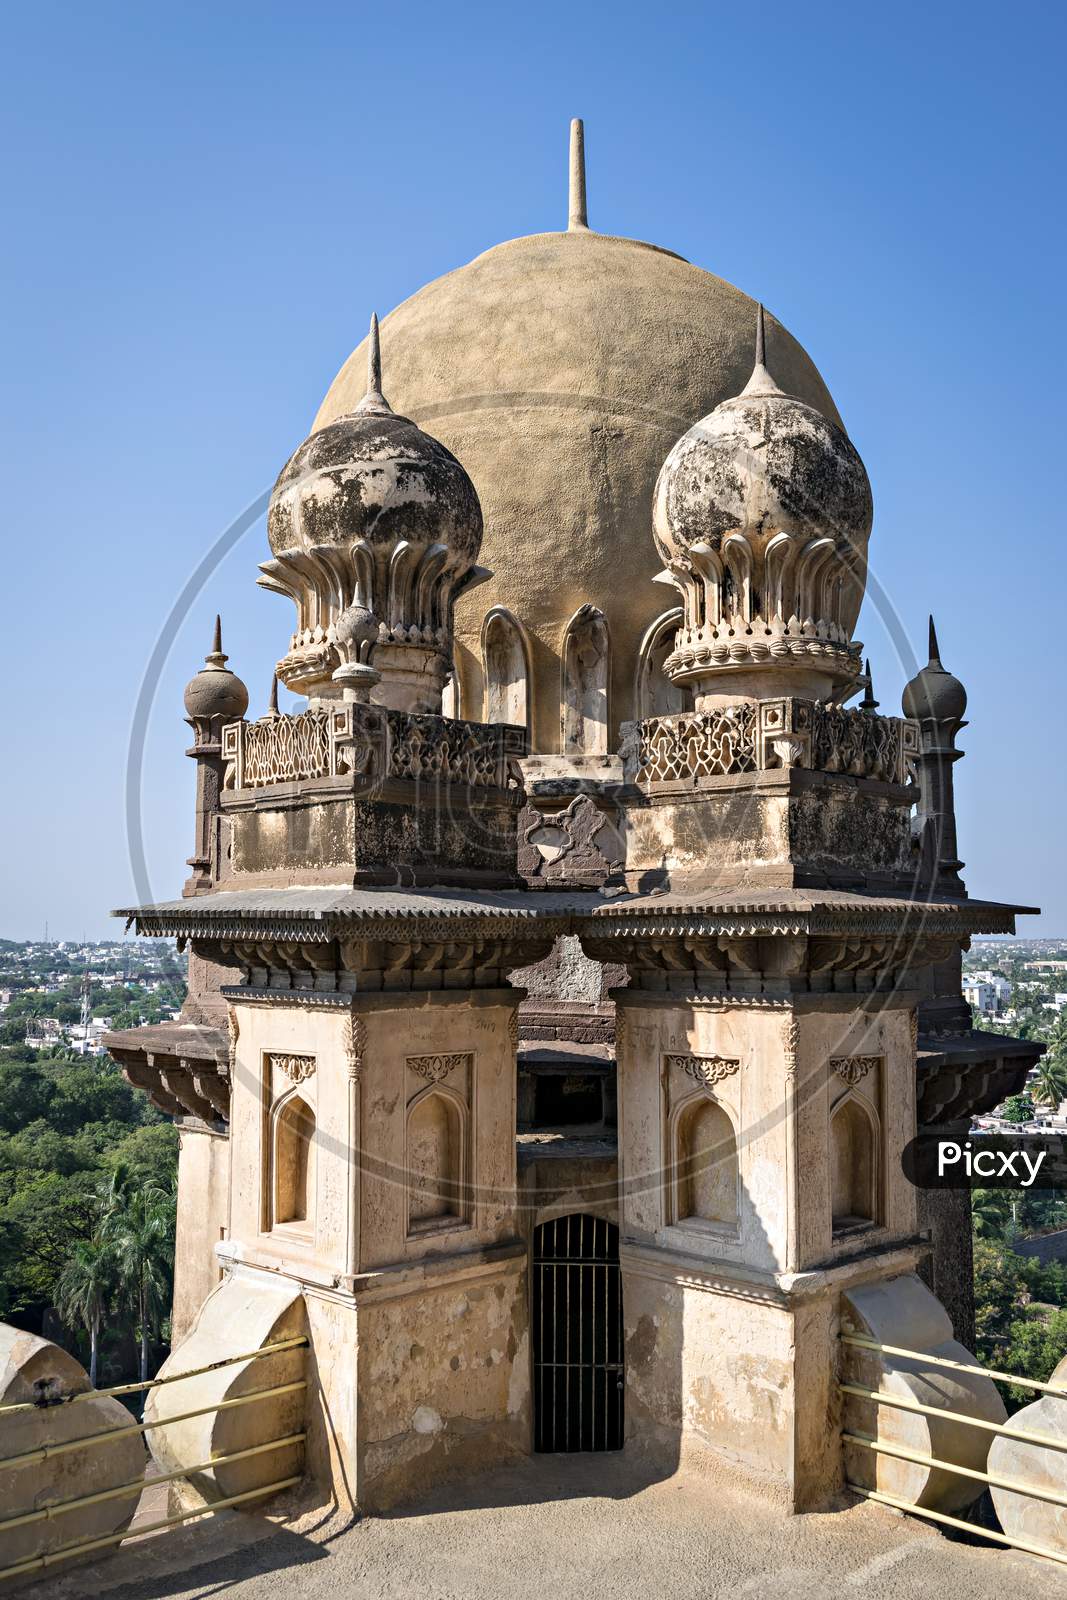 Corner Dome Of Heritage Monument - Gol Ghumbaj, Bijapur, India.